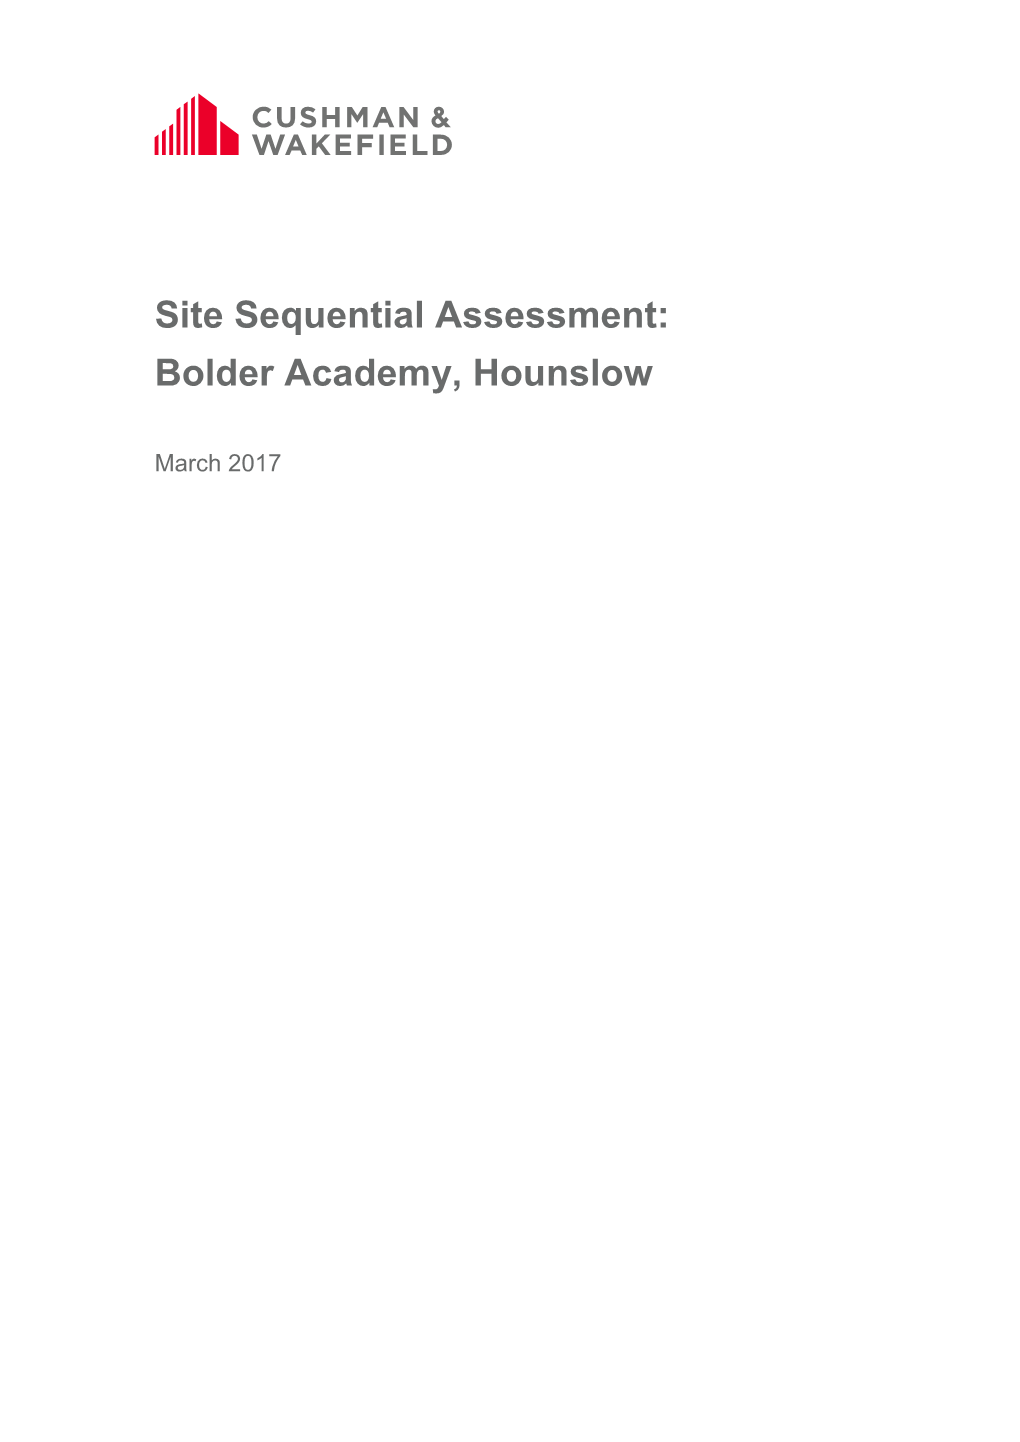 Site Sequential Assessment: Bolder Academy, Hounslow